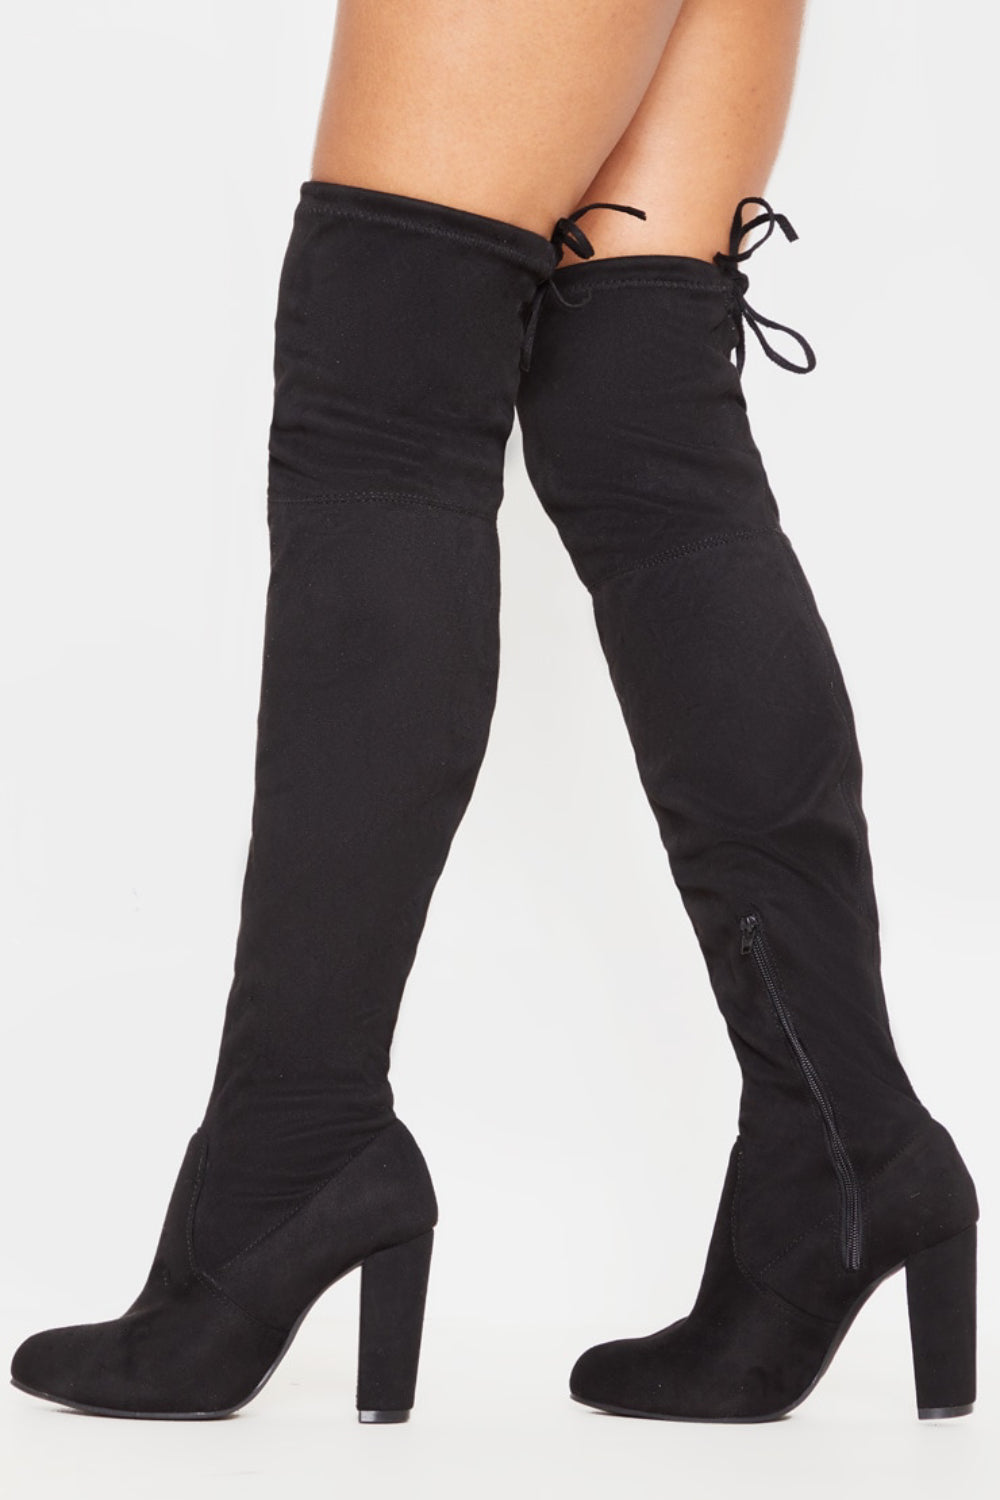 Buy Black Boots for Women by ELLE Online | Ajio.com